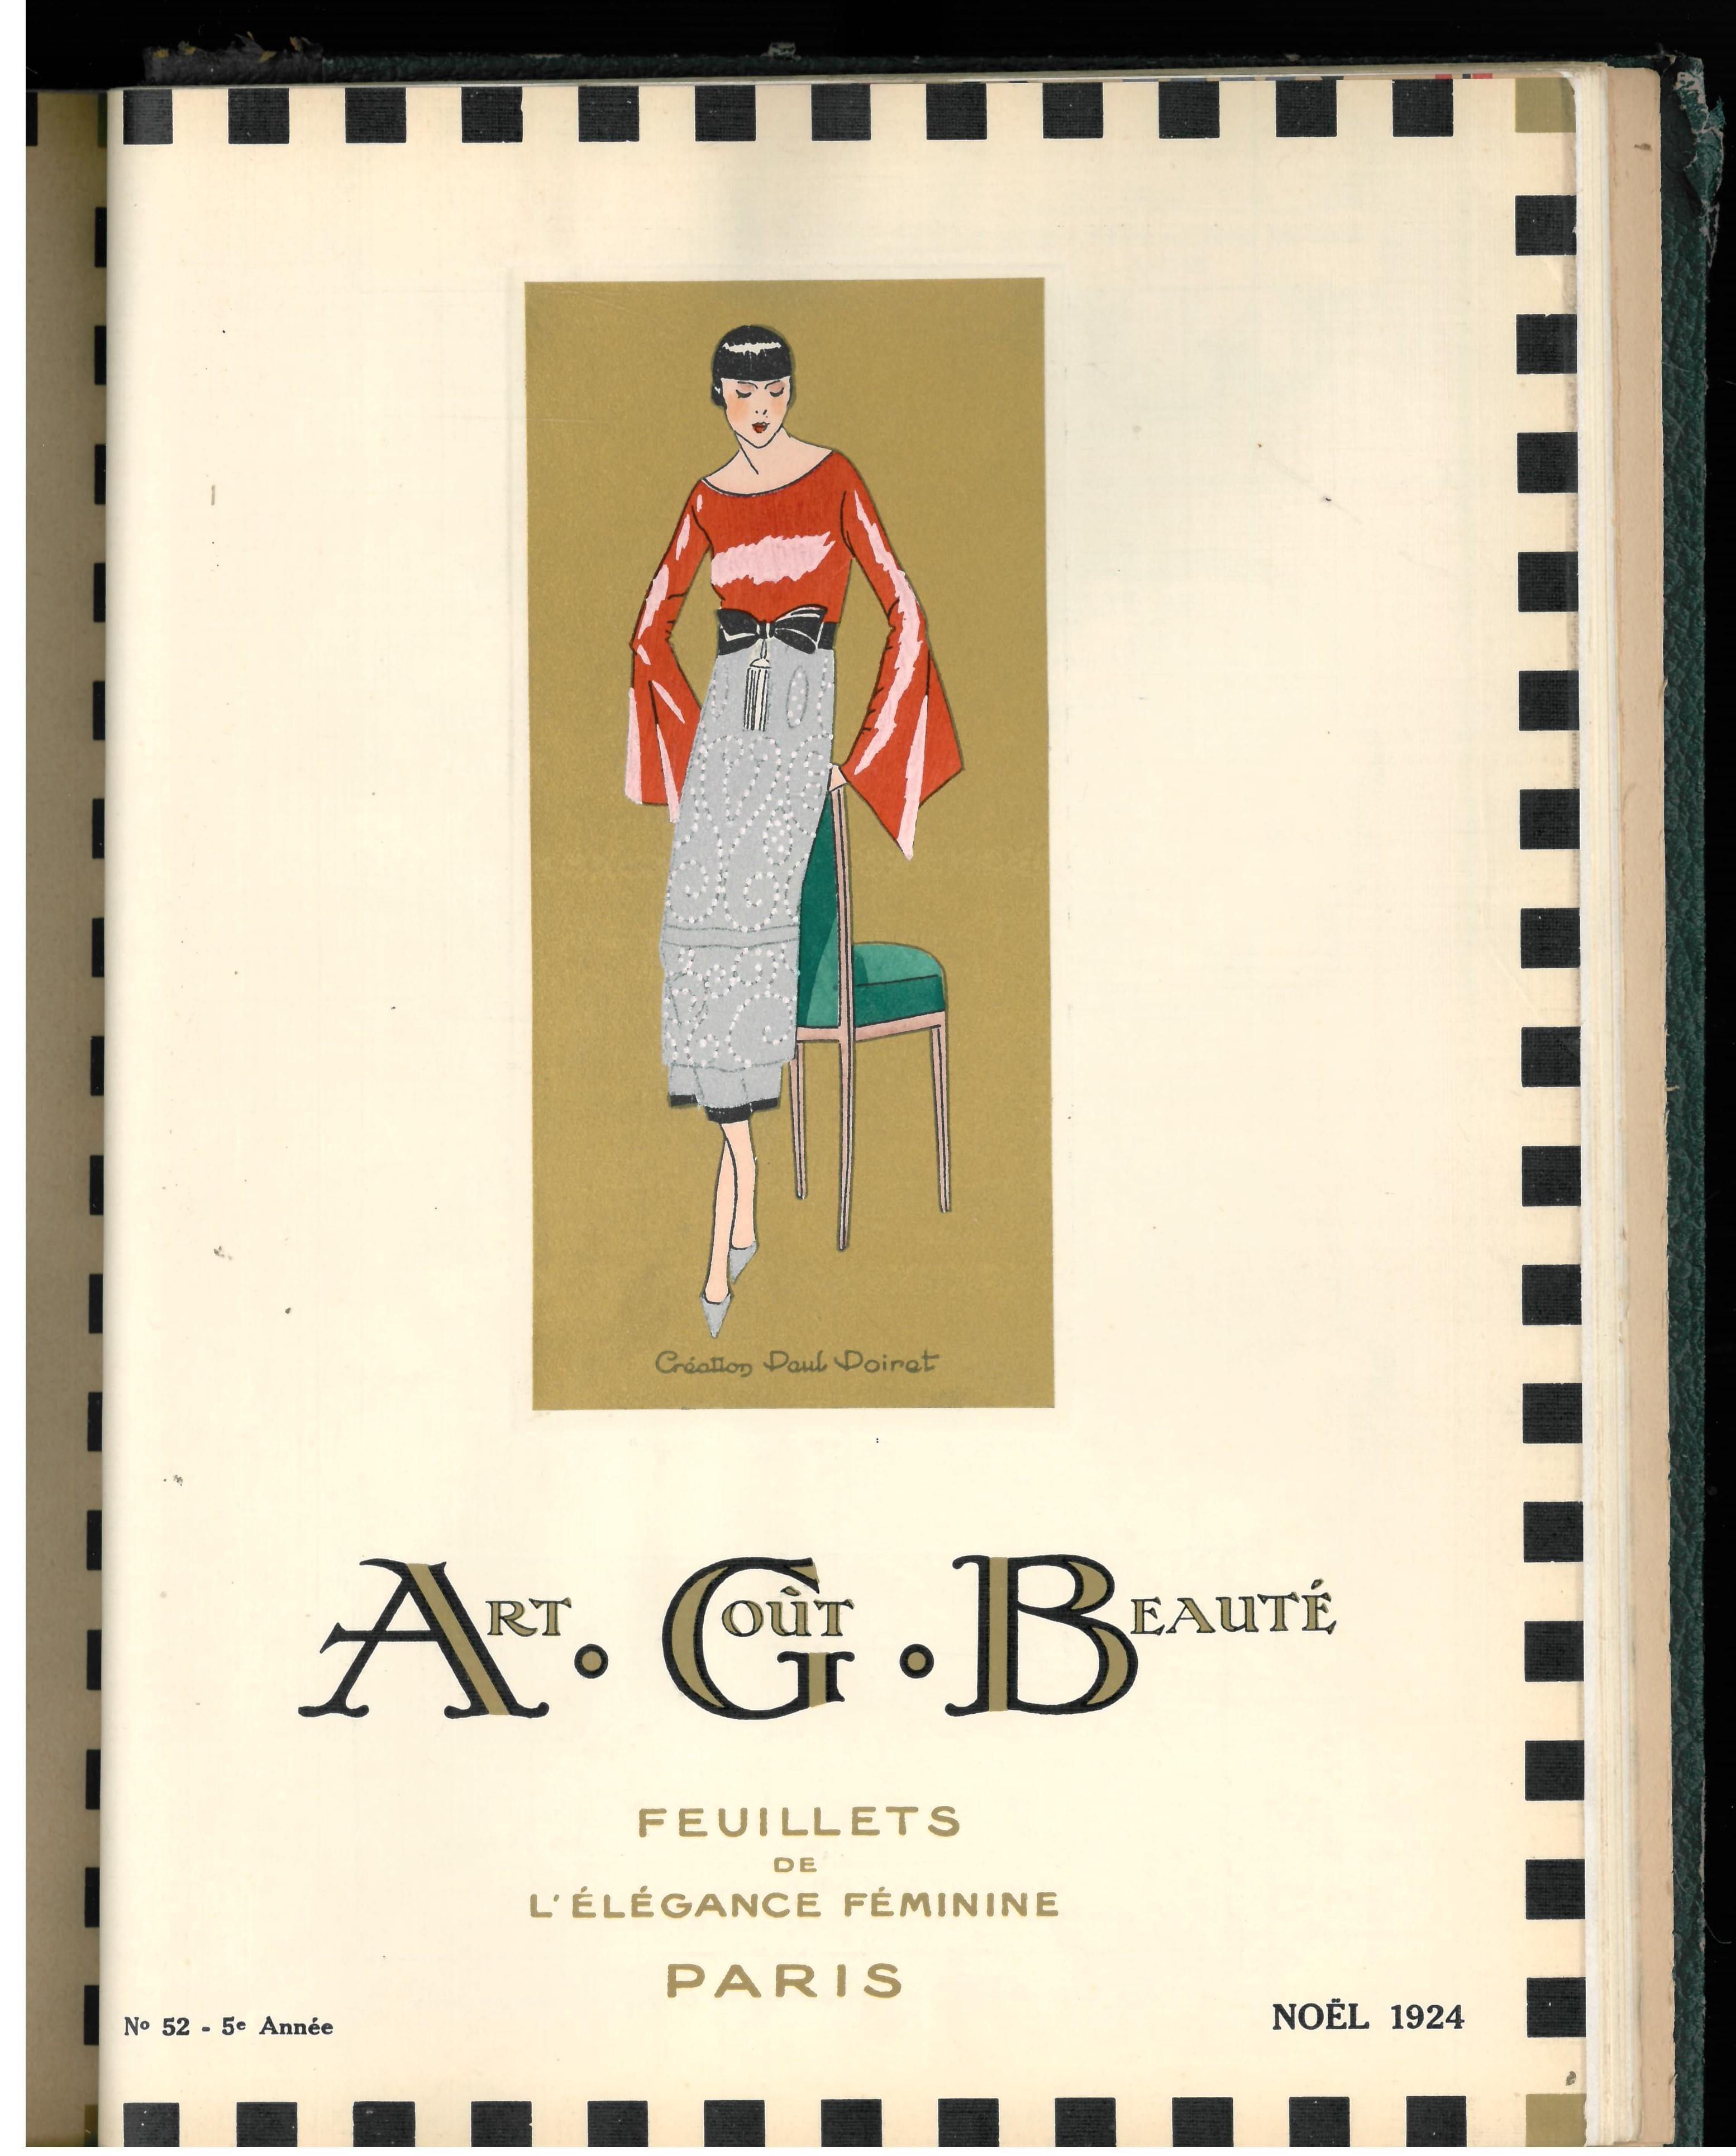 Art, Gout, Beaute: Feuillets de L'Elegance Feminine (Book)  In Fair Condition For Sale In North Yorkshire, GB